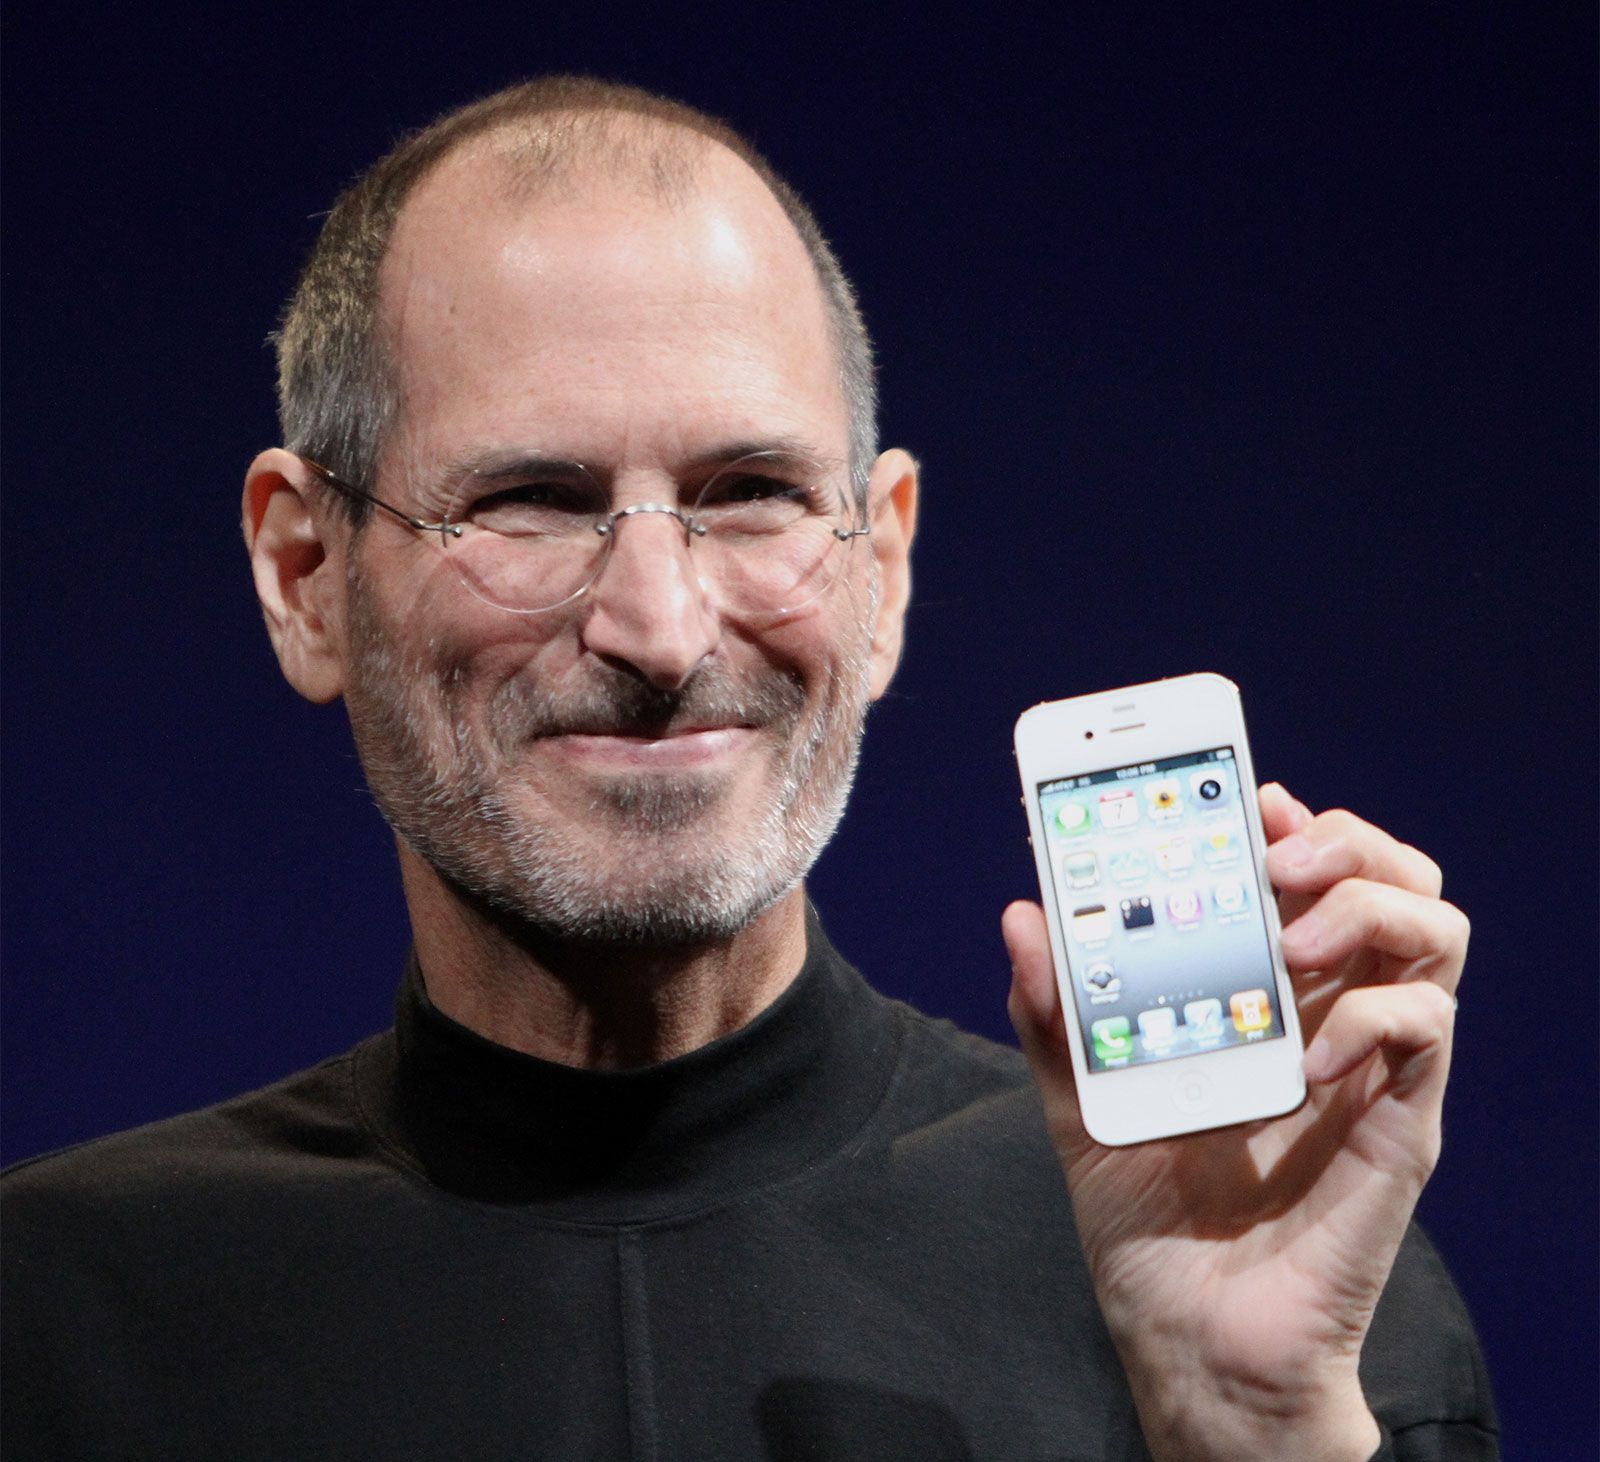 Steve-Jobs-iPhone-2010.jpg